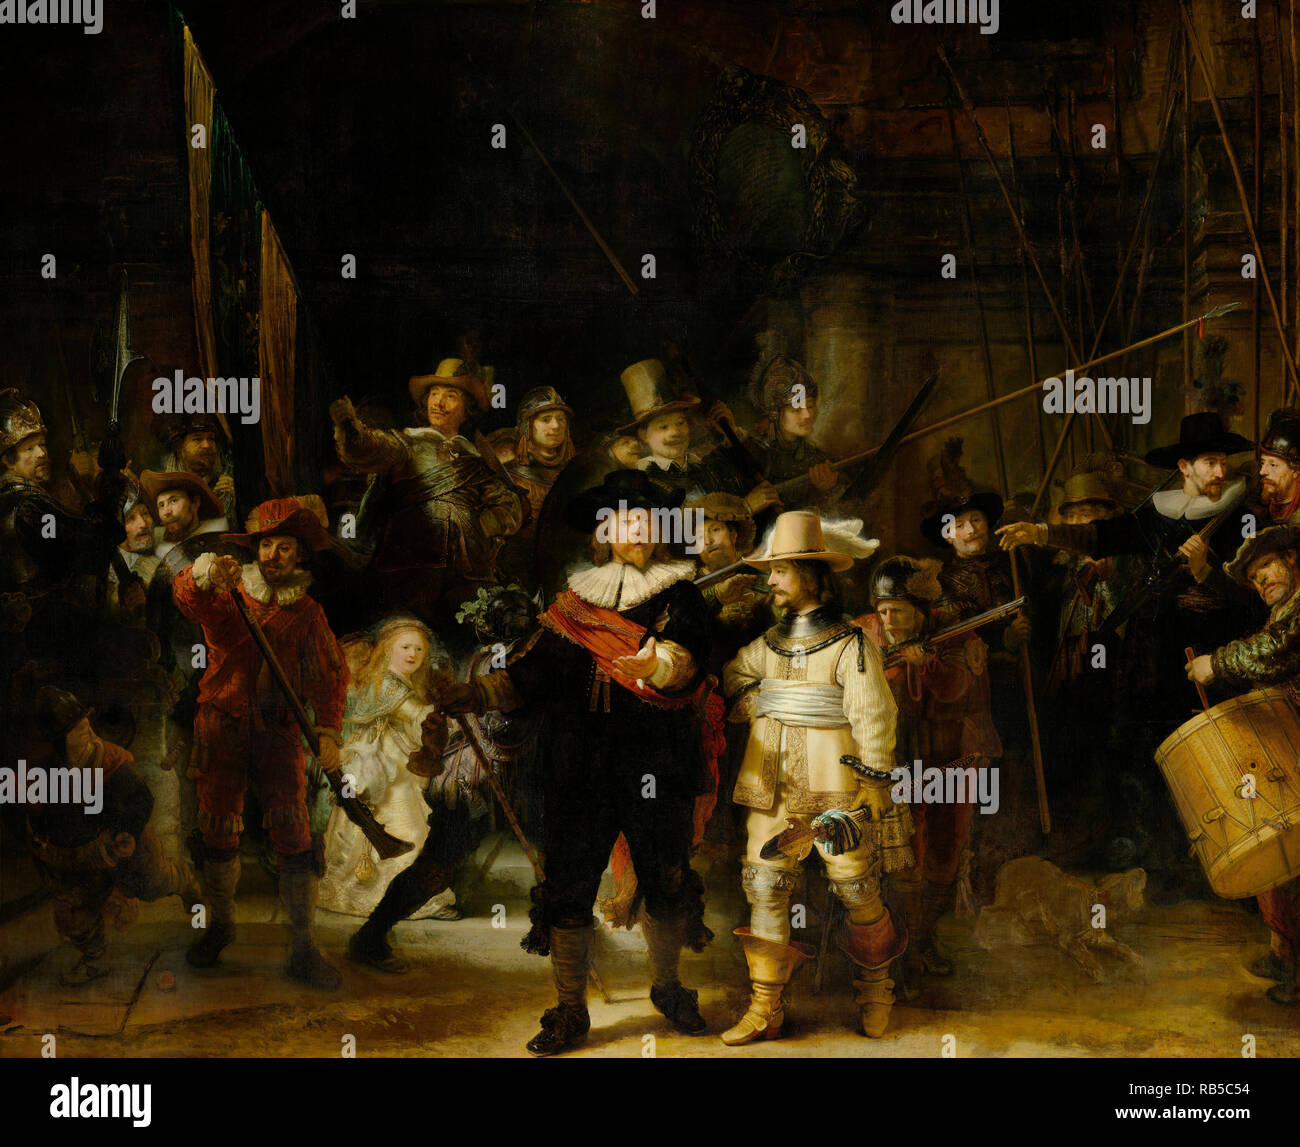 I Paesi Bassi, Amsterdam, Rijksmuseum. Verniciatura della compagnia di Frans Cocq Banninck oppurele ronda di notte. Rembrandt van Rijn. 1642. Foto Stock